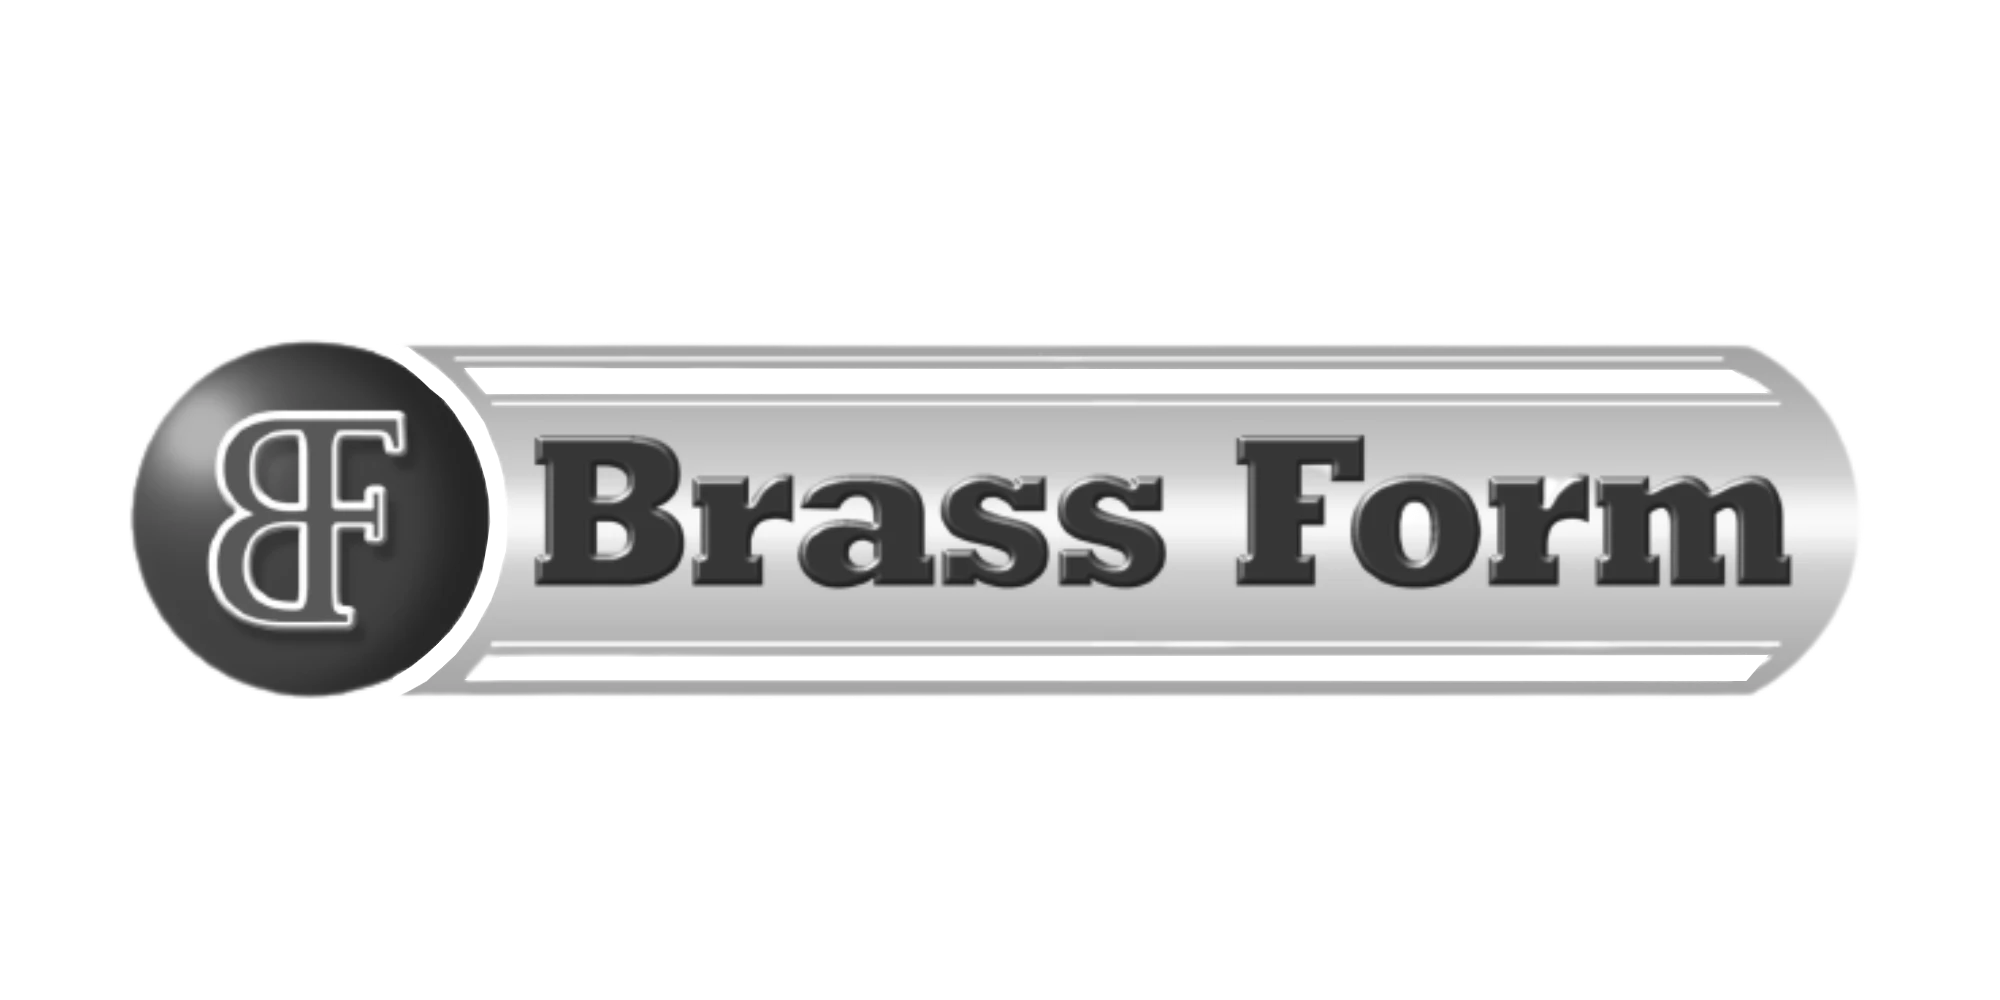 Brass From, transp